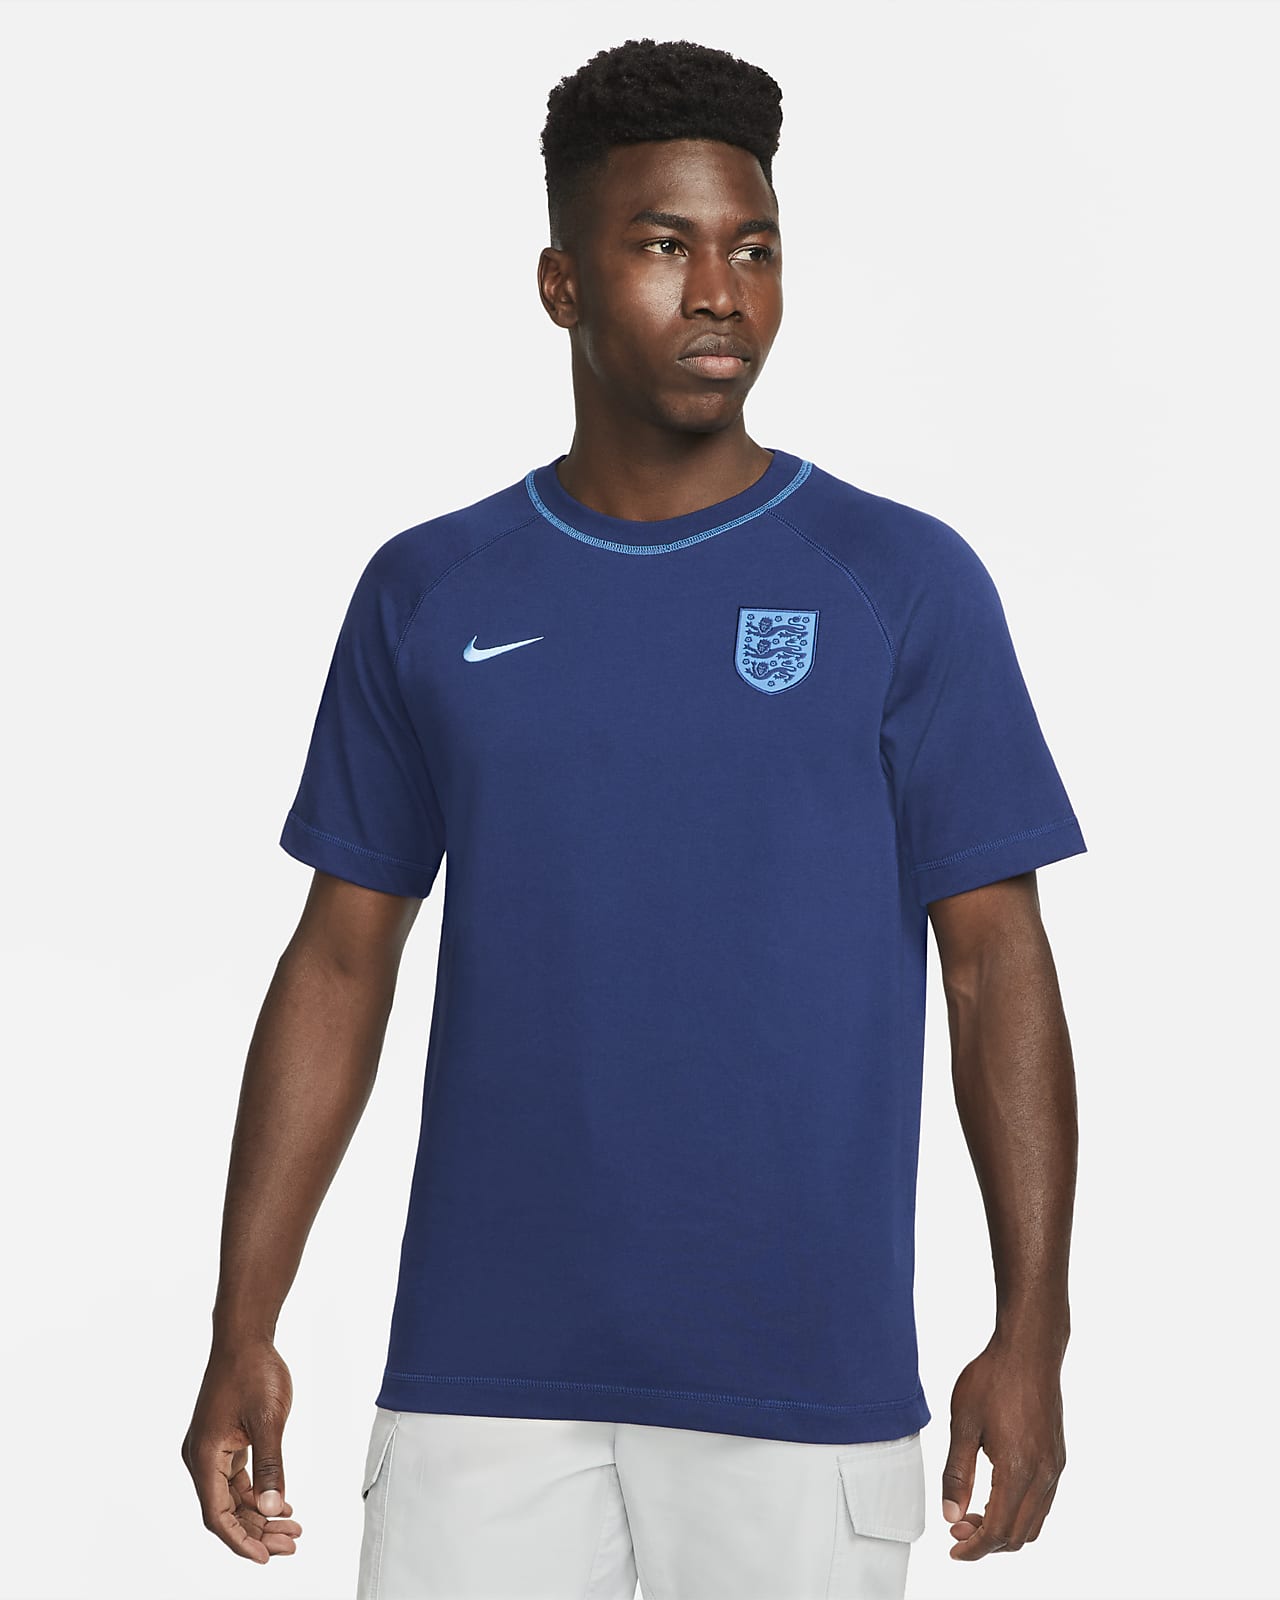 England Men's Nike Soccer Top